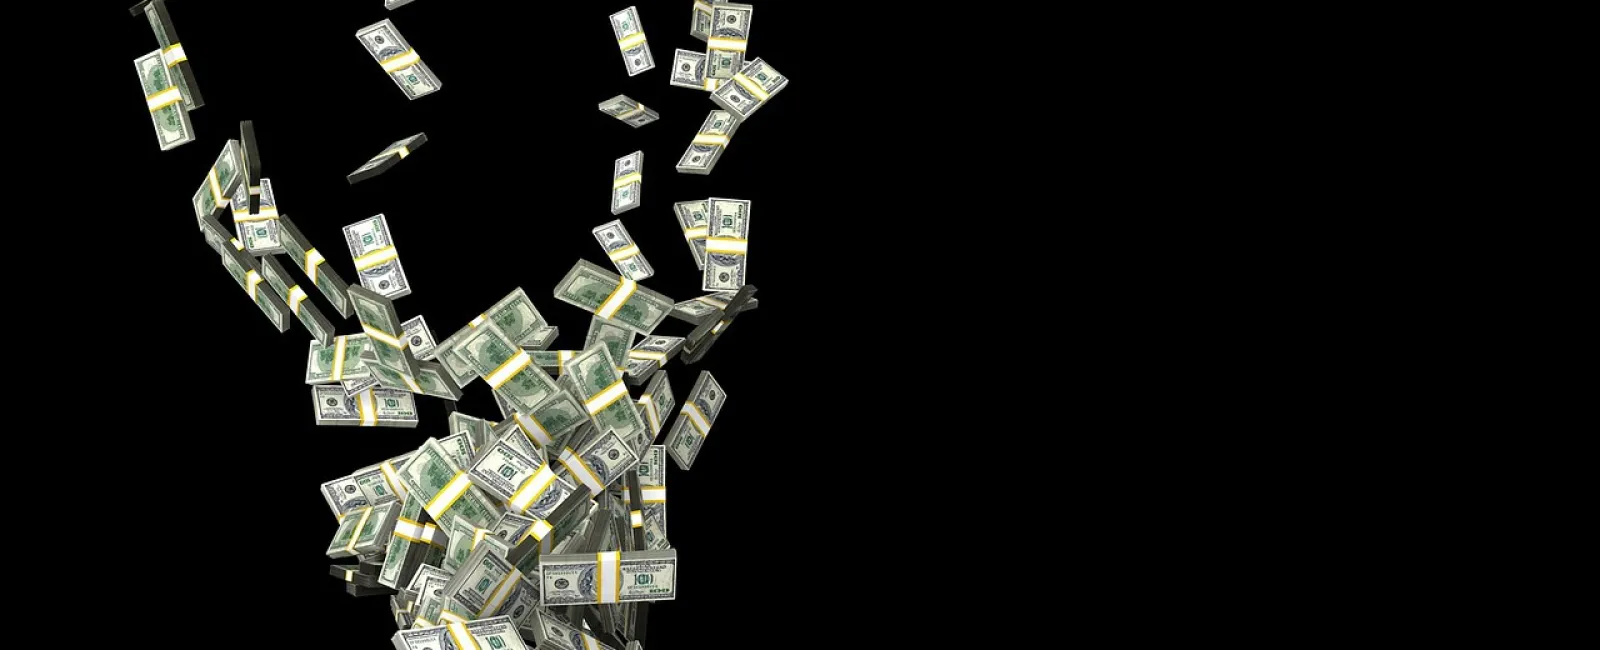 $5.25 Million Dollar Settlement for Lincare Inc. Announced by the DOJ